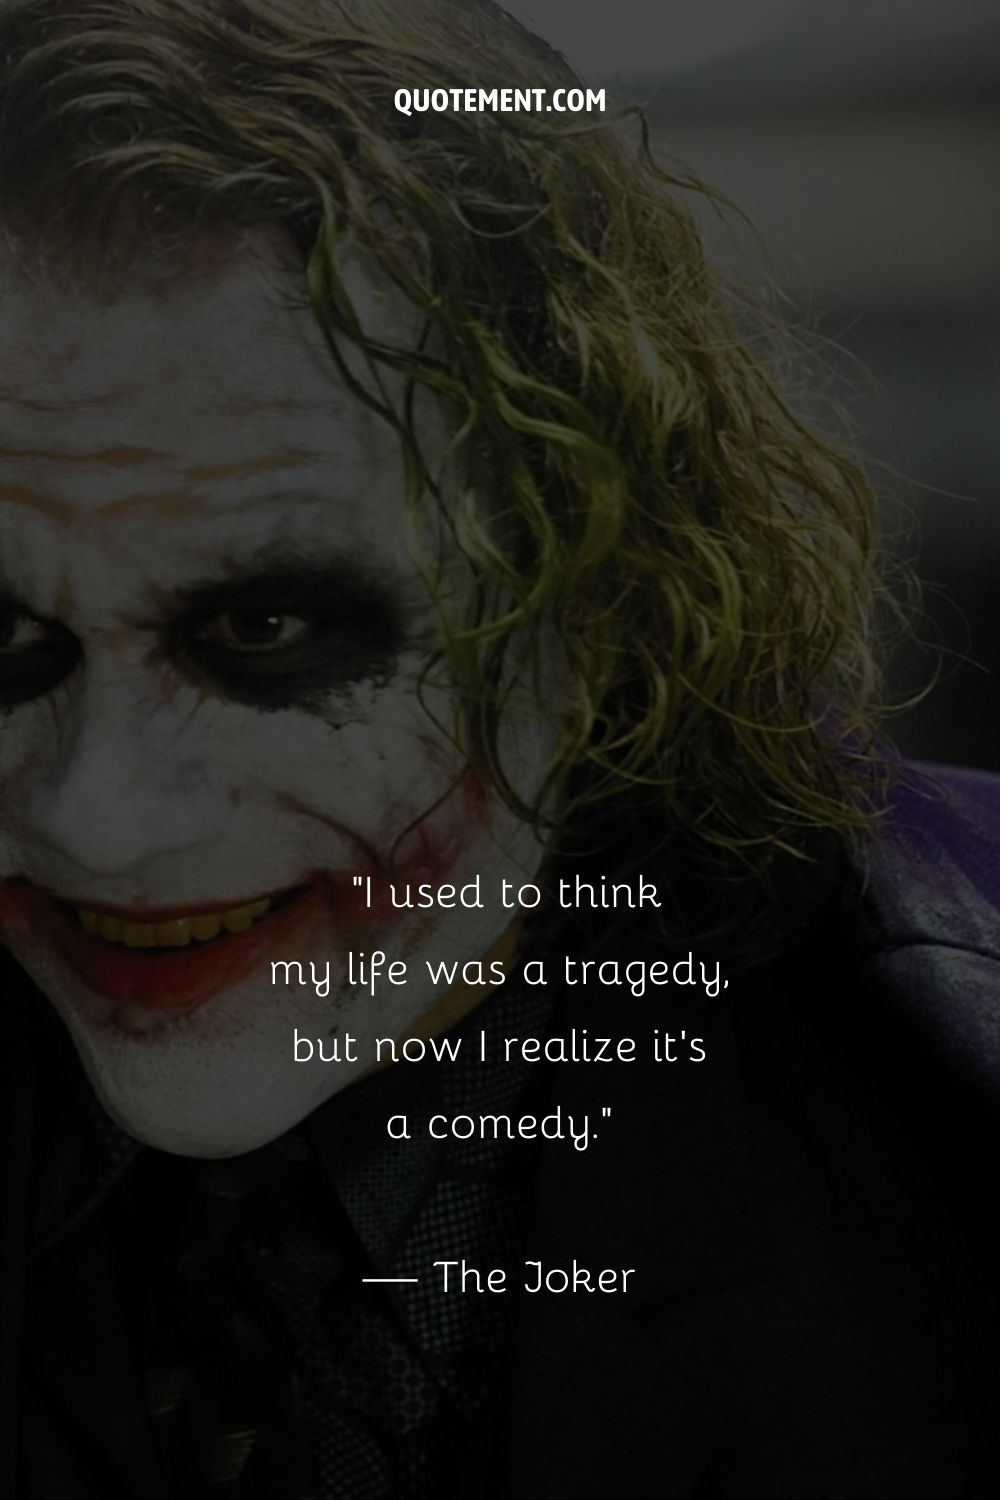 Memorable Joker quote from the movie Joker.
